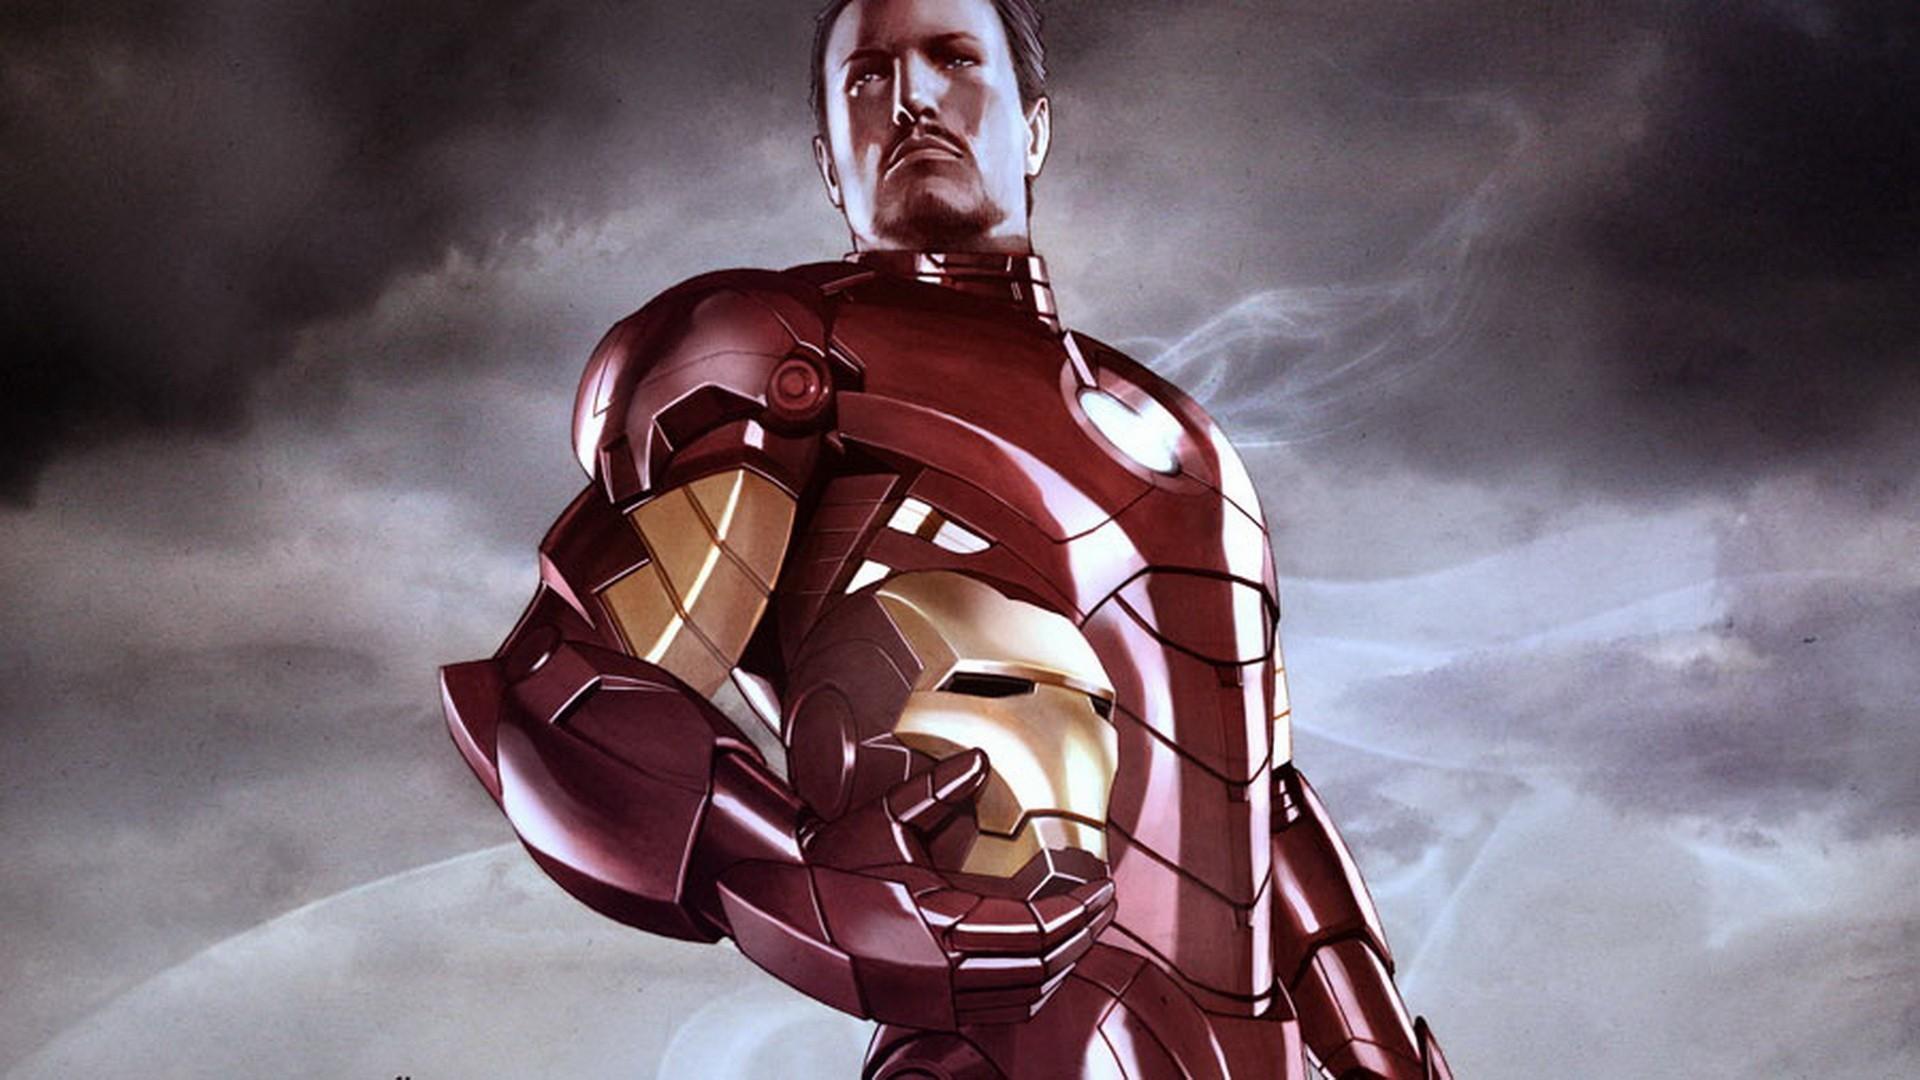 Iron man 2 marvel comics tony stark wallpaper